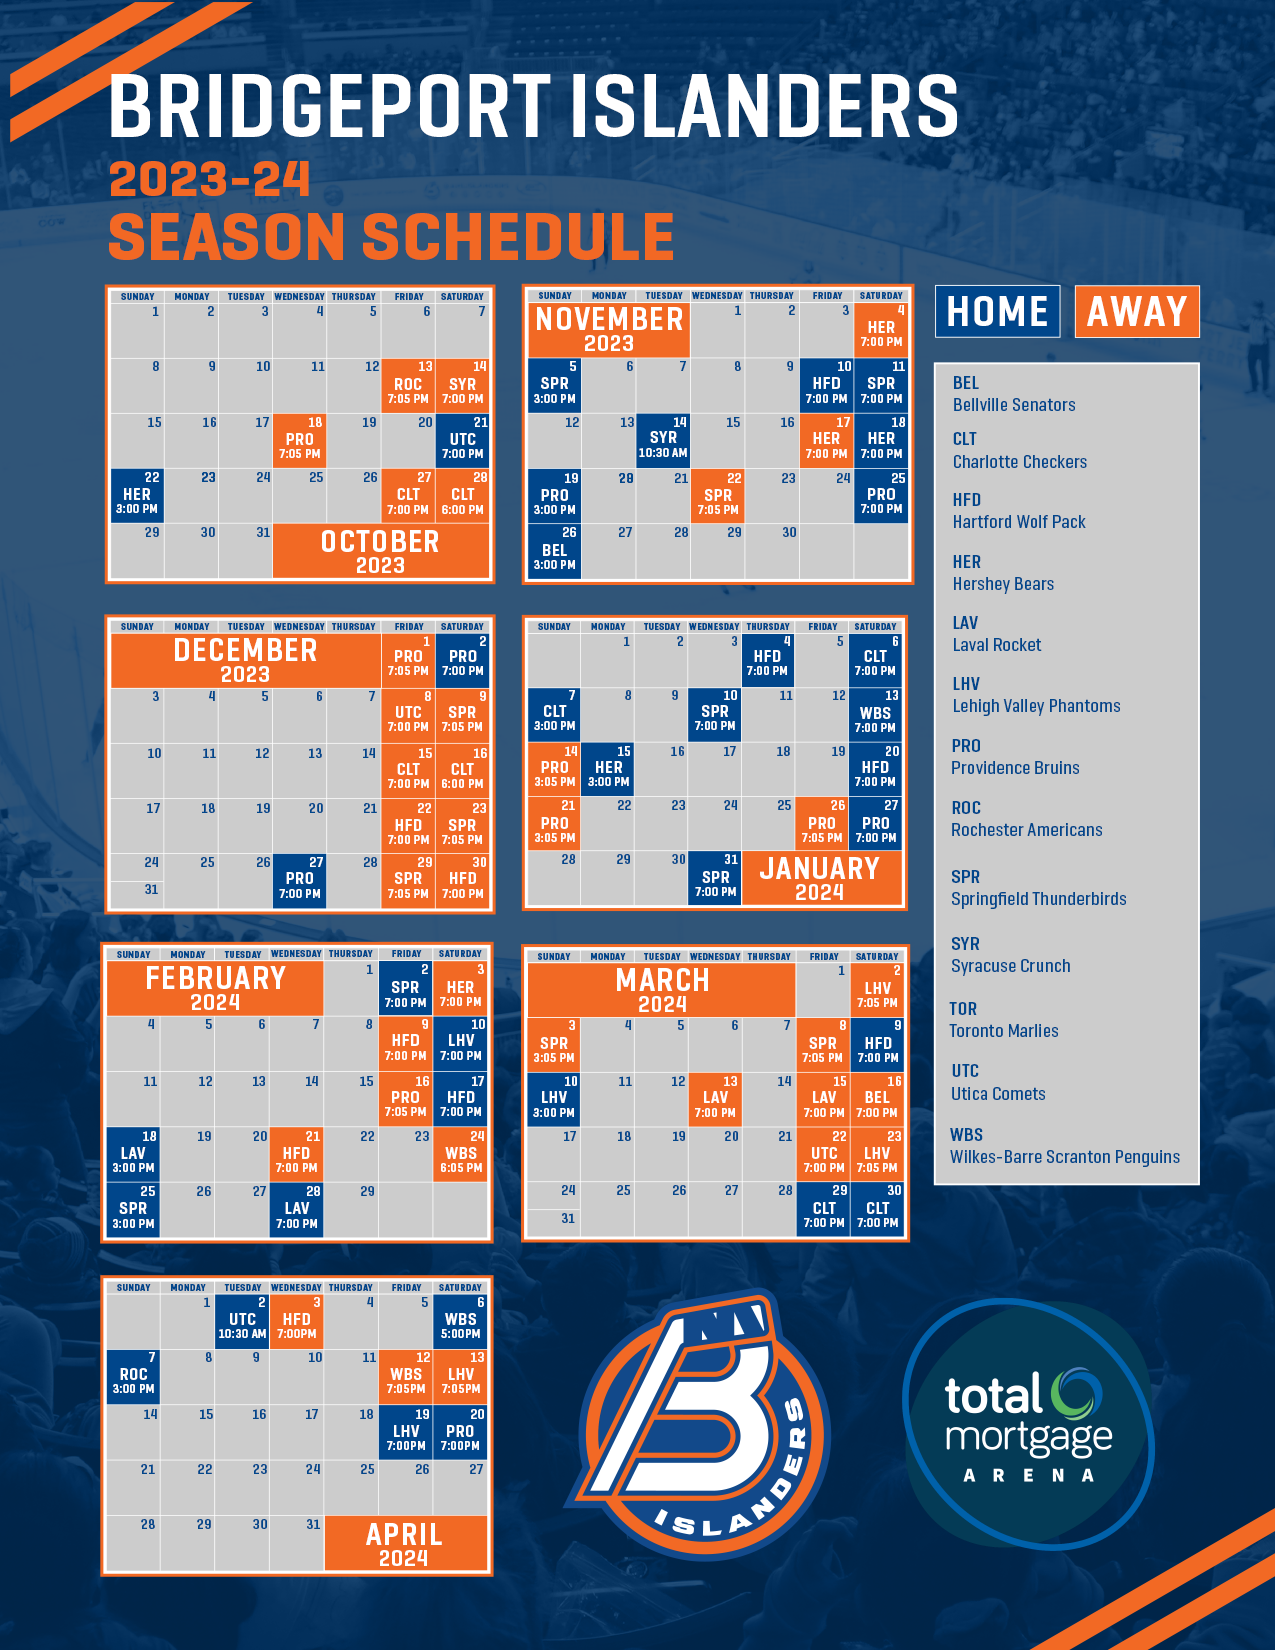 New York Islanders Schedule Released: Key Dates for Upcoming 2023-24 Season